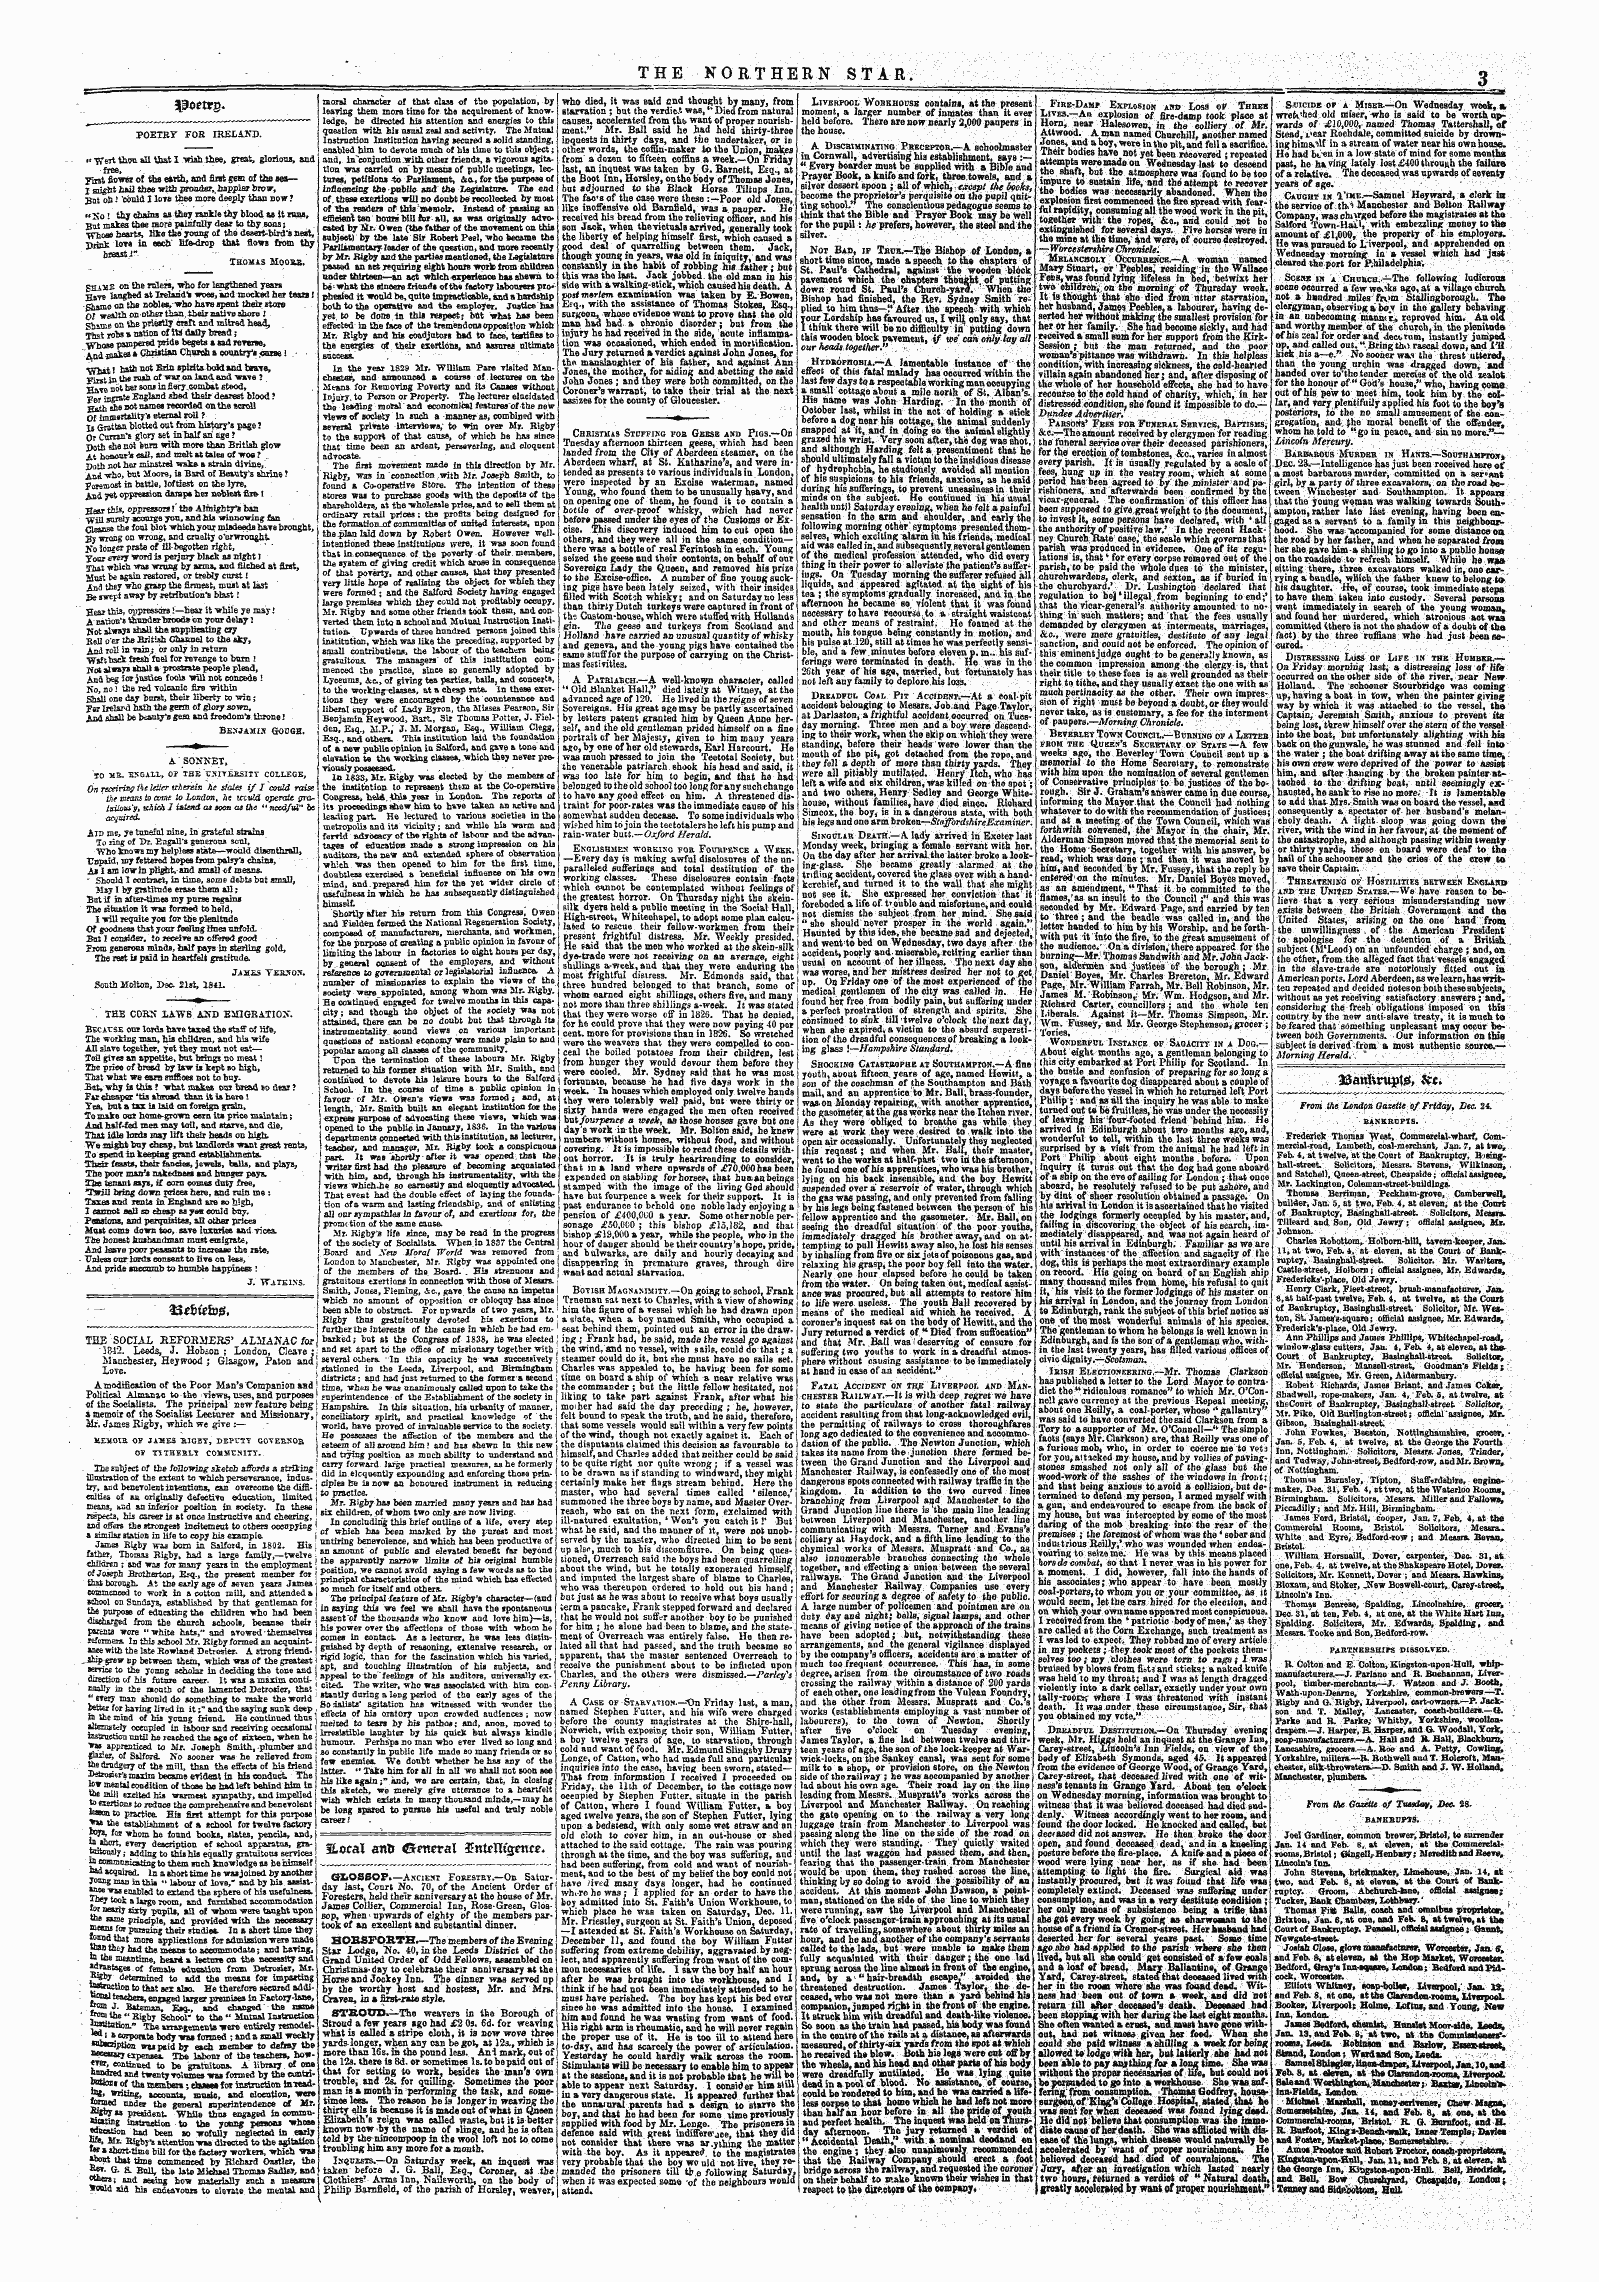 Northern Star (1837-1852): jS F Y, 3rd edition - ^Awtmt^Js , $*I